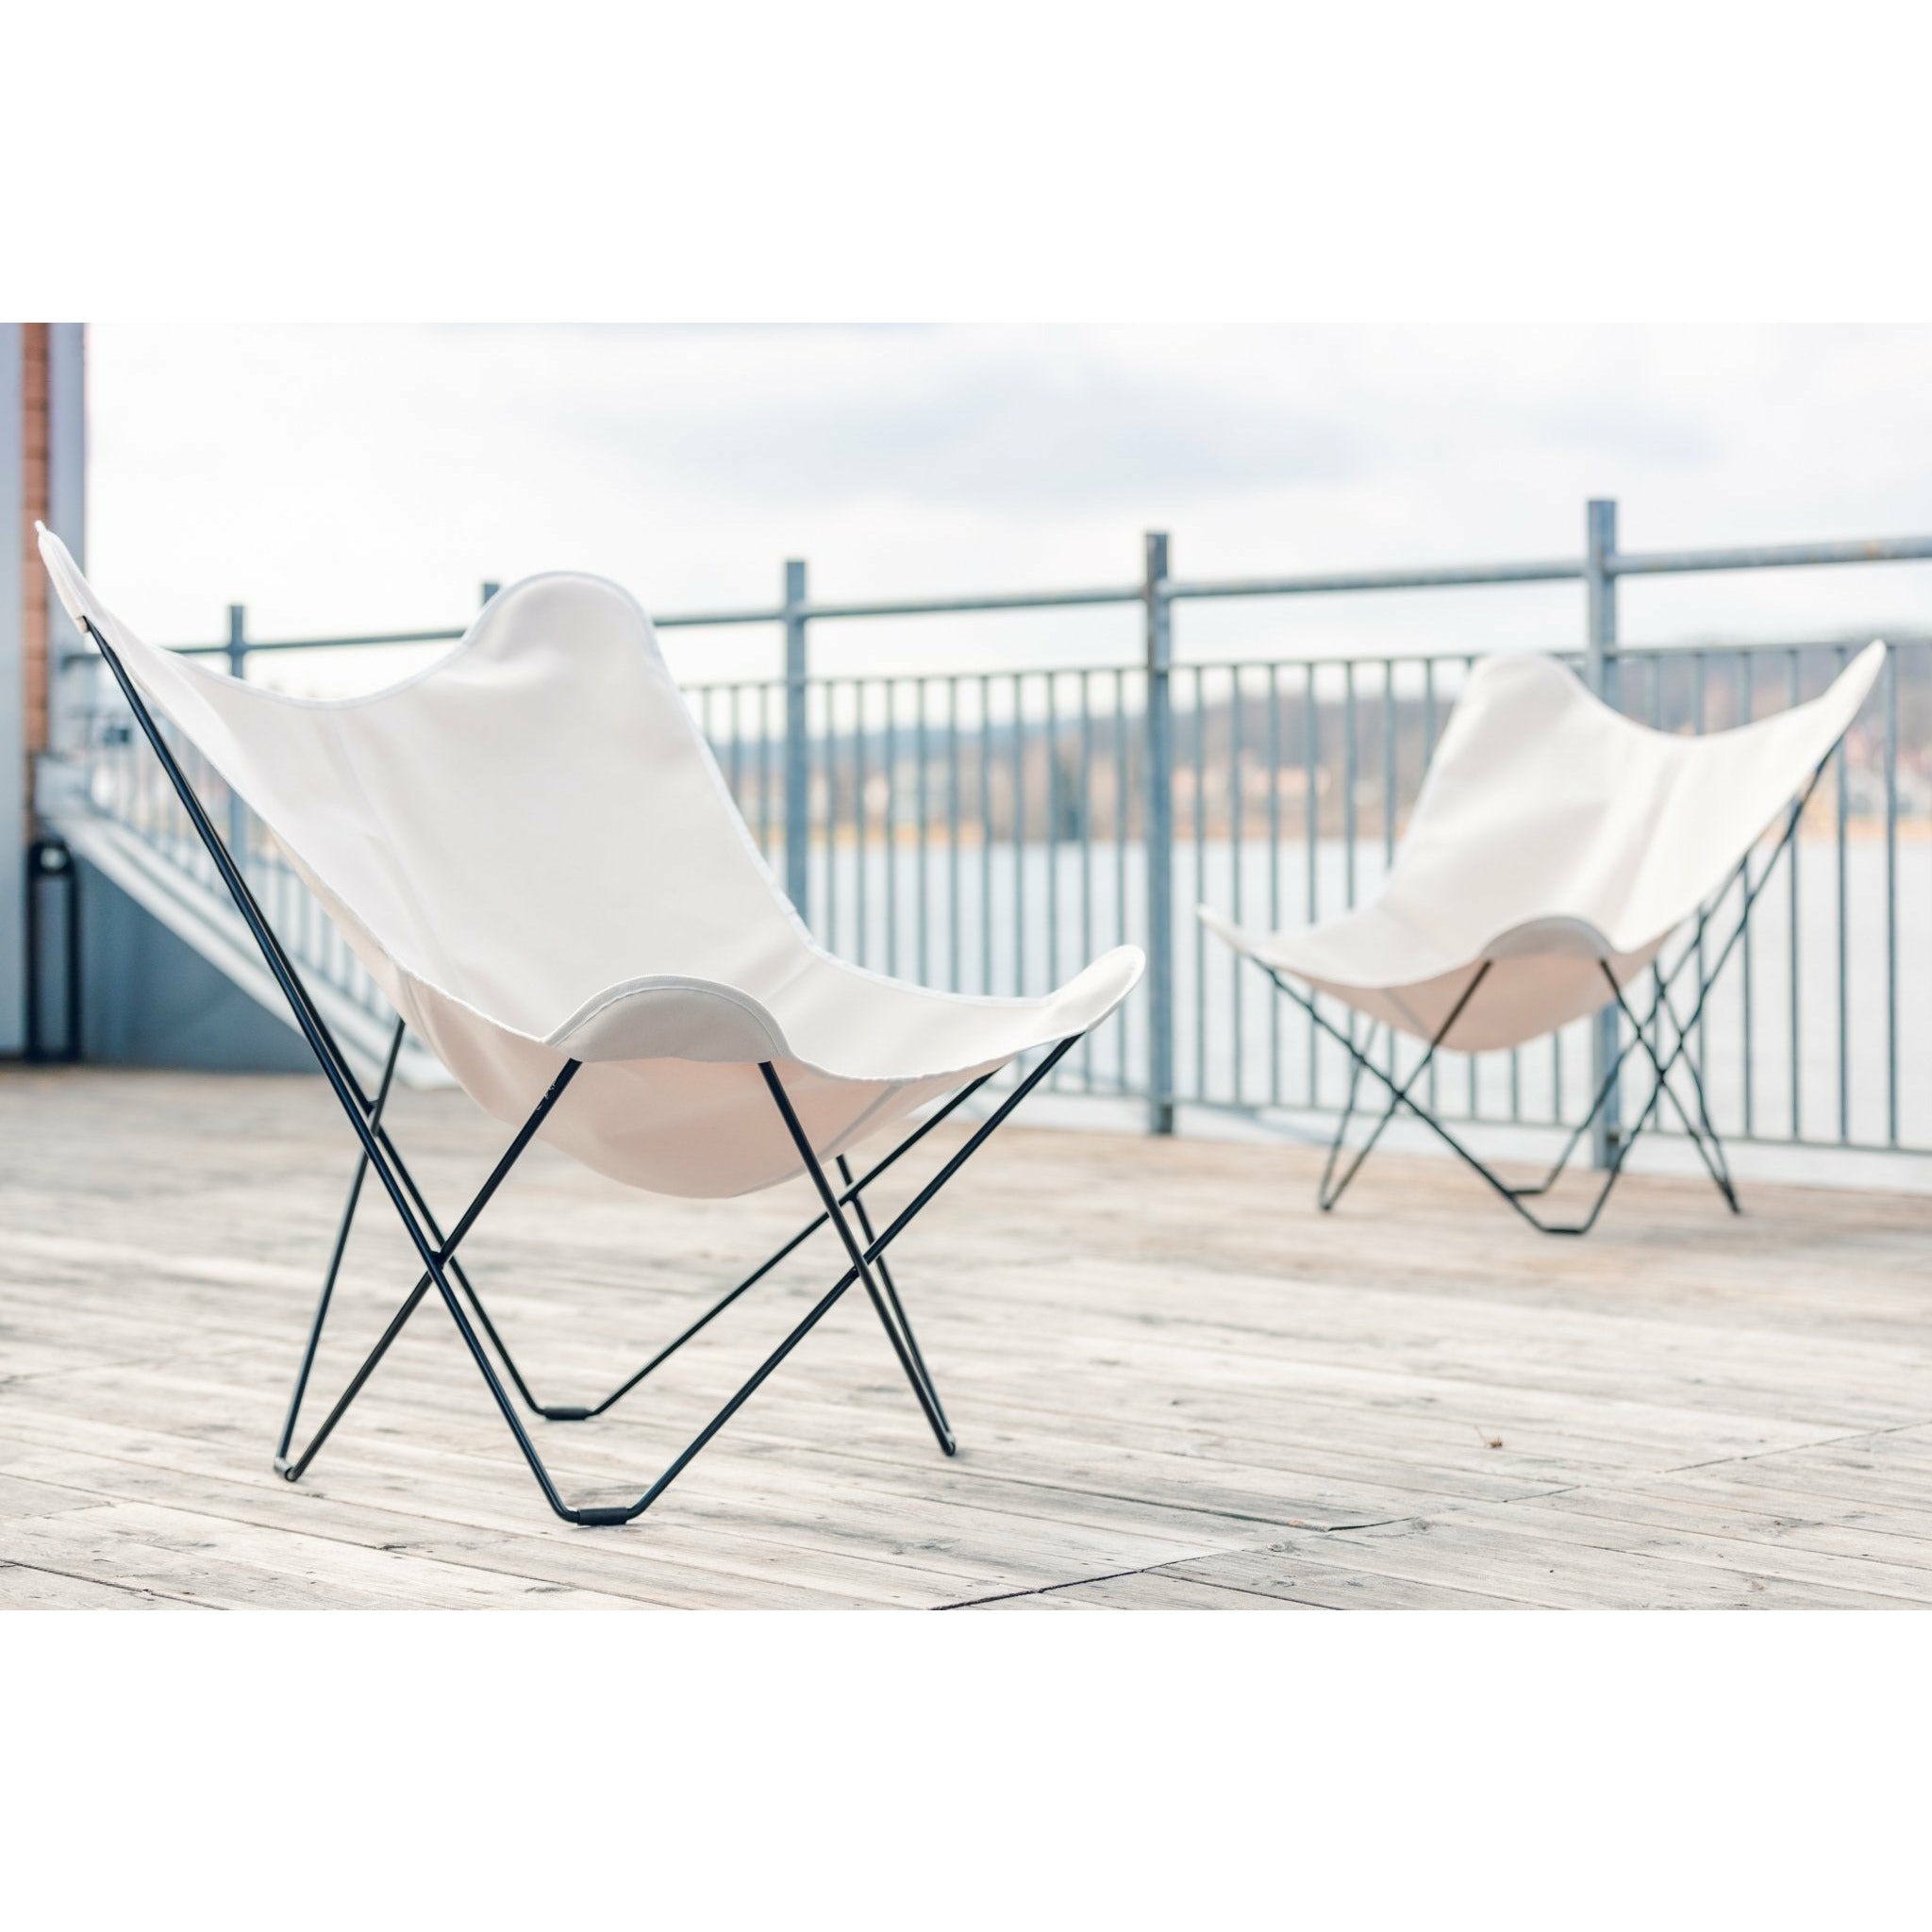 Cuero Sunshine Mariposa Butterfly Chair, Oyster/Black